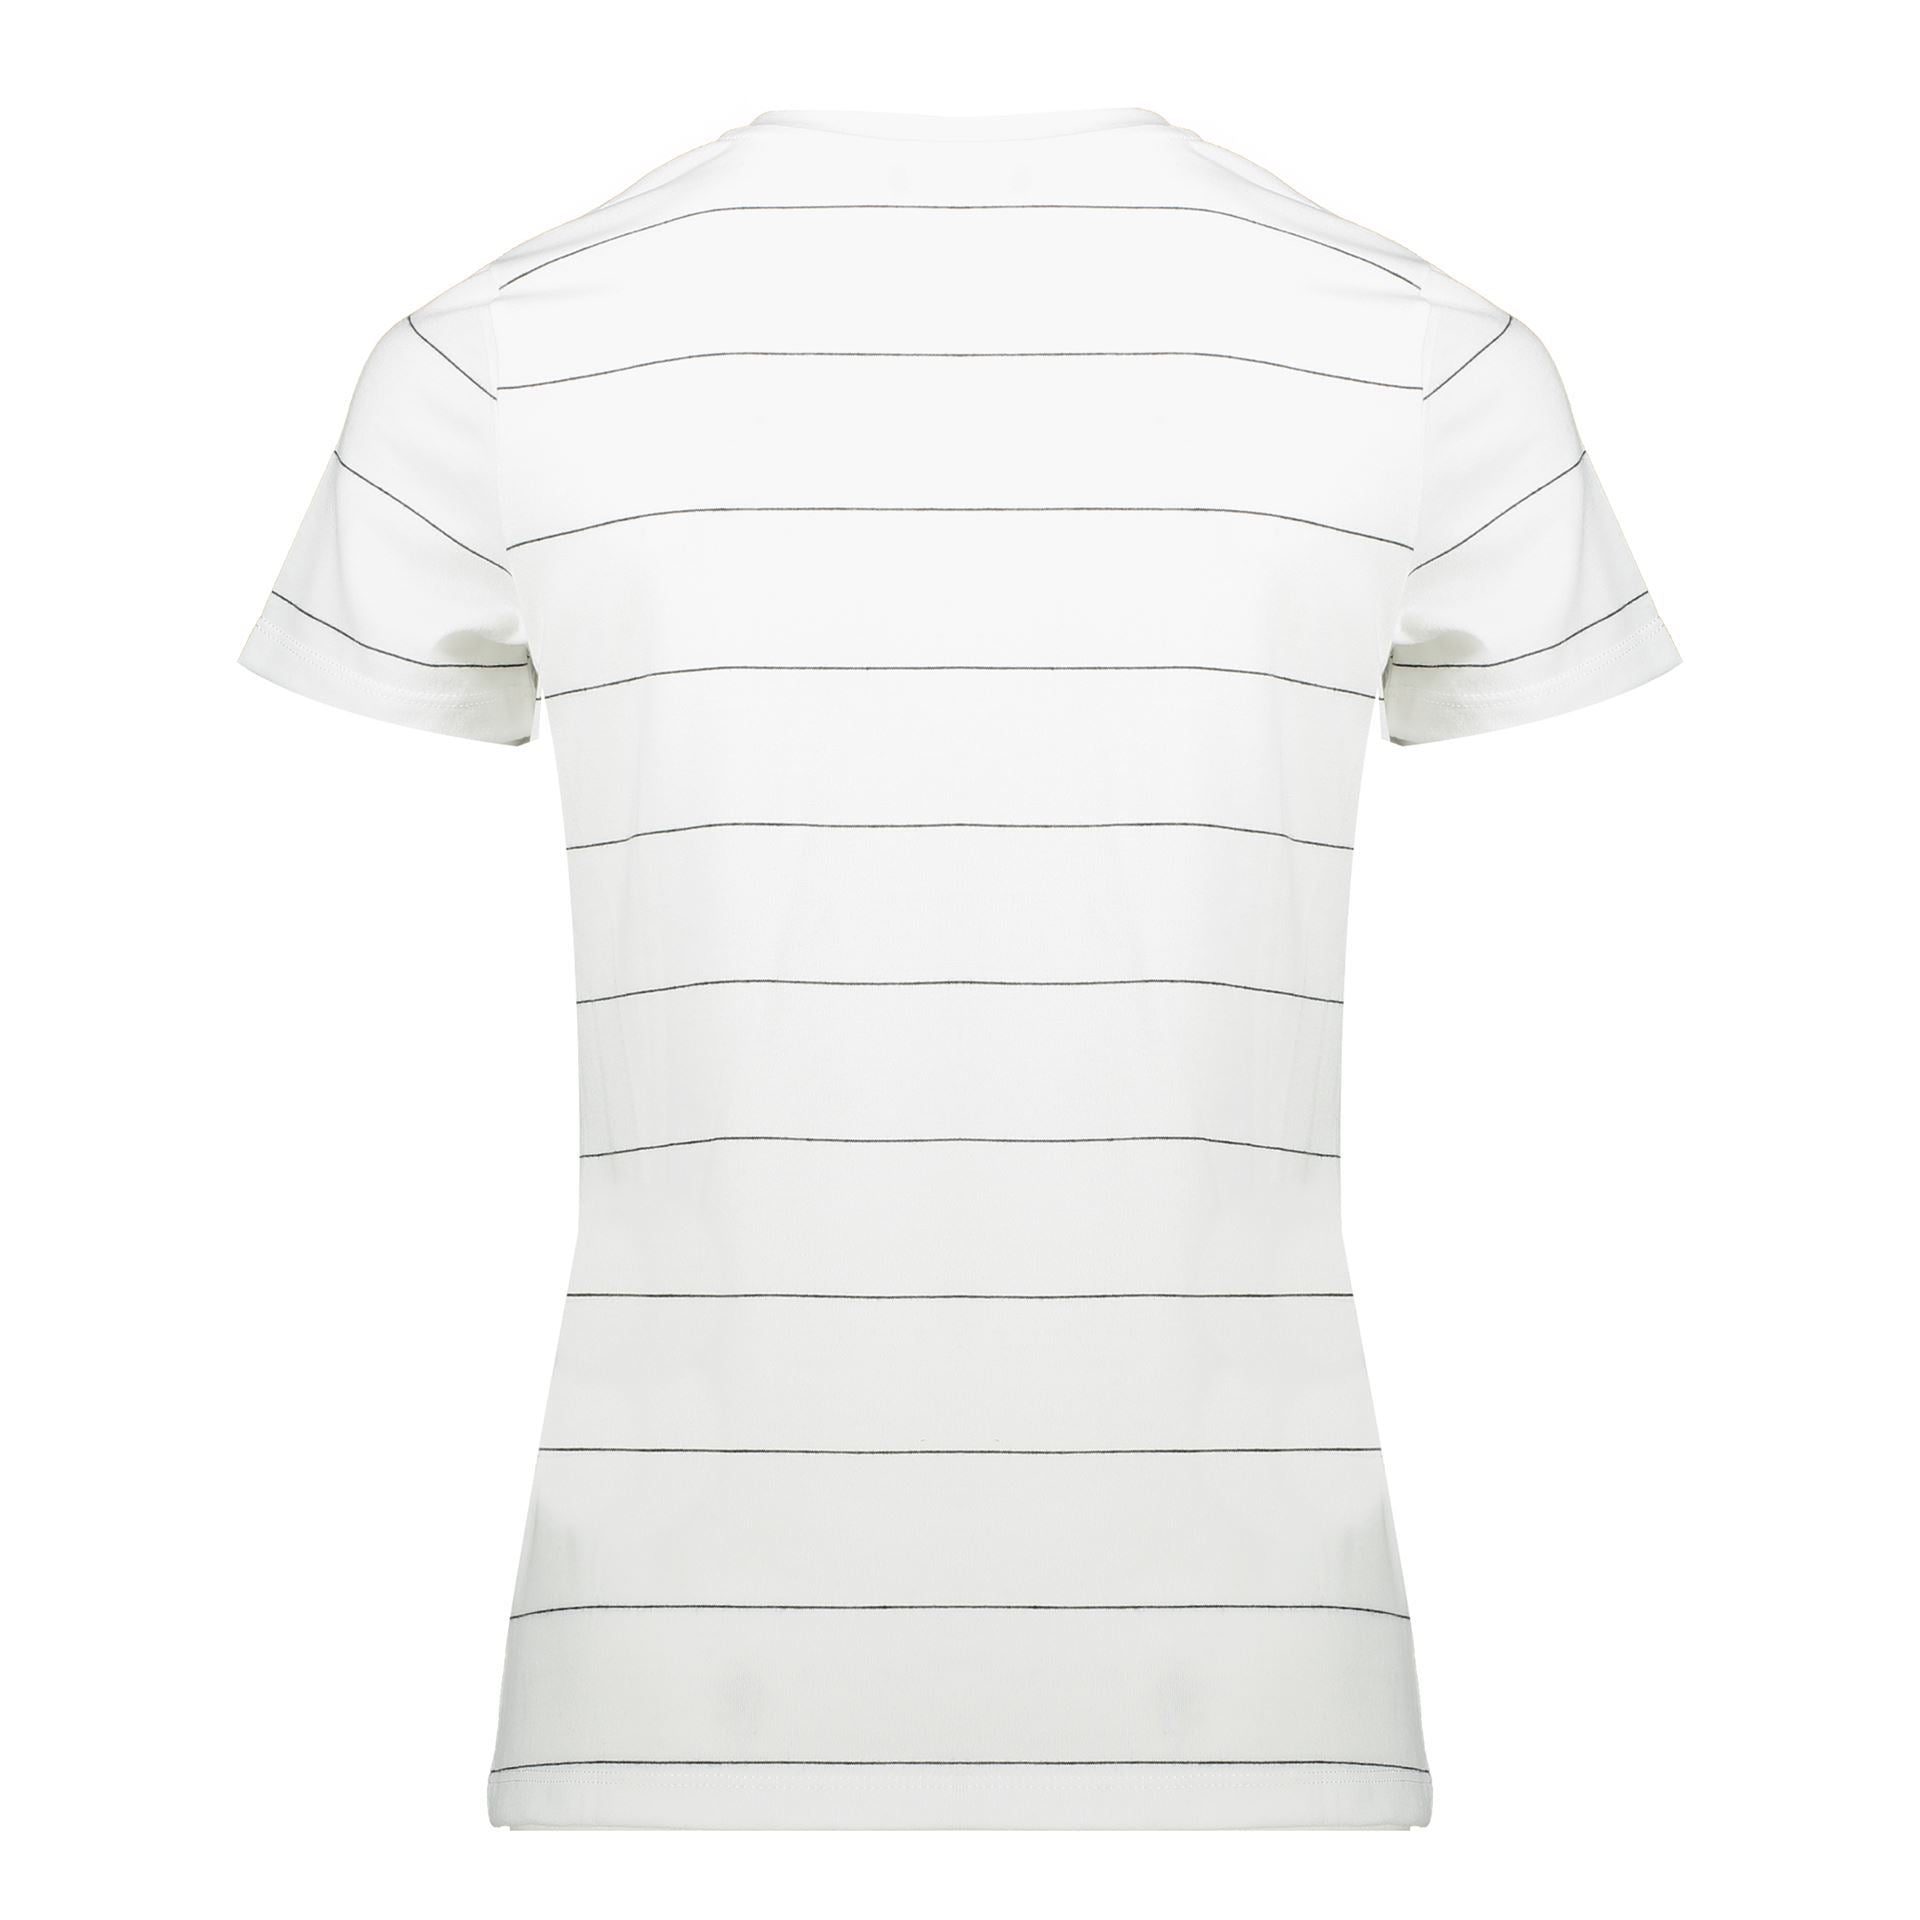 Meisjes T-Shirt "Sil Vous Plait" S/S van Geisha in de kleur White/Black/Gold in maat 176.